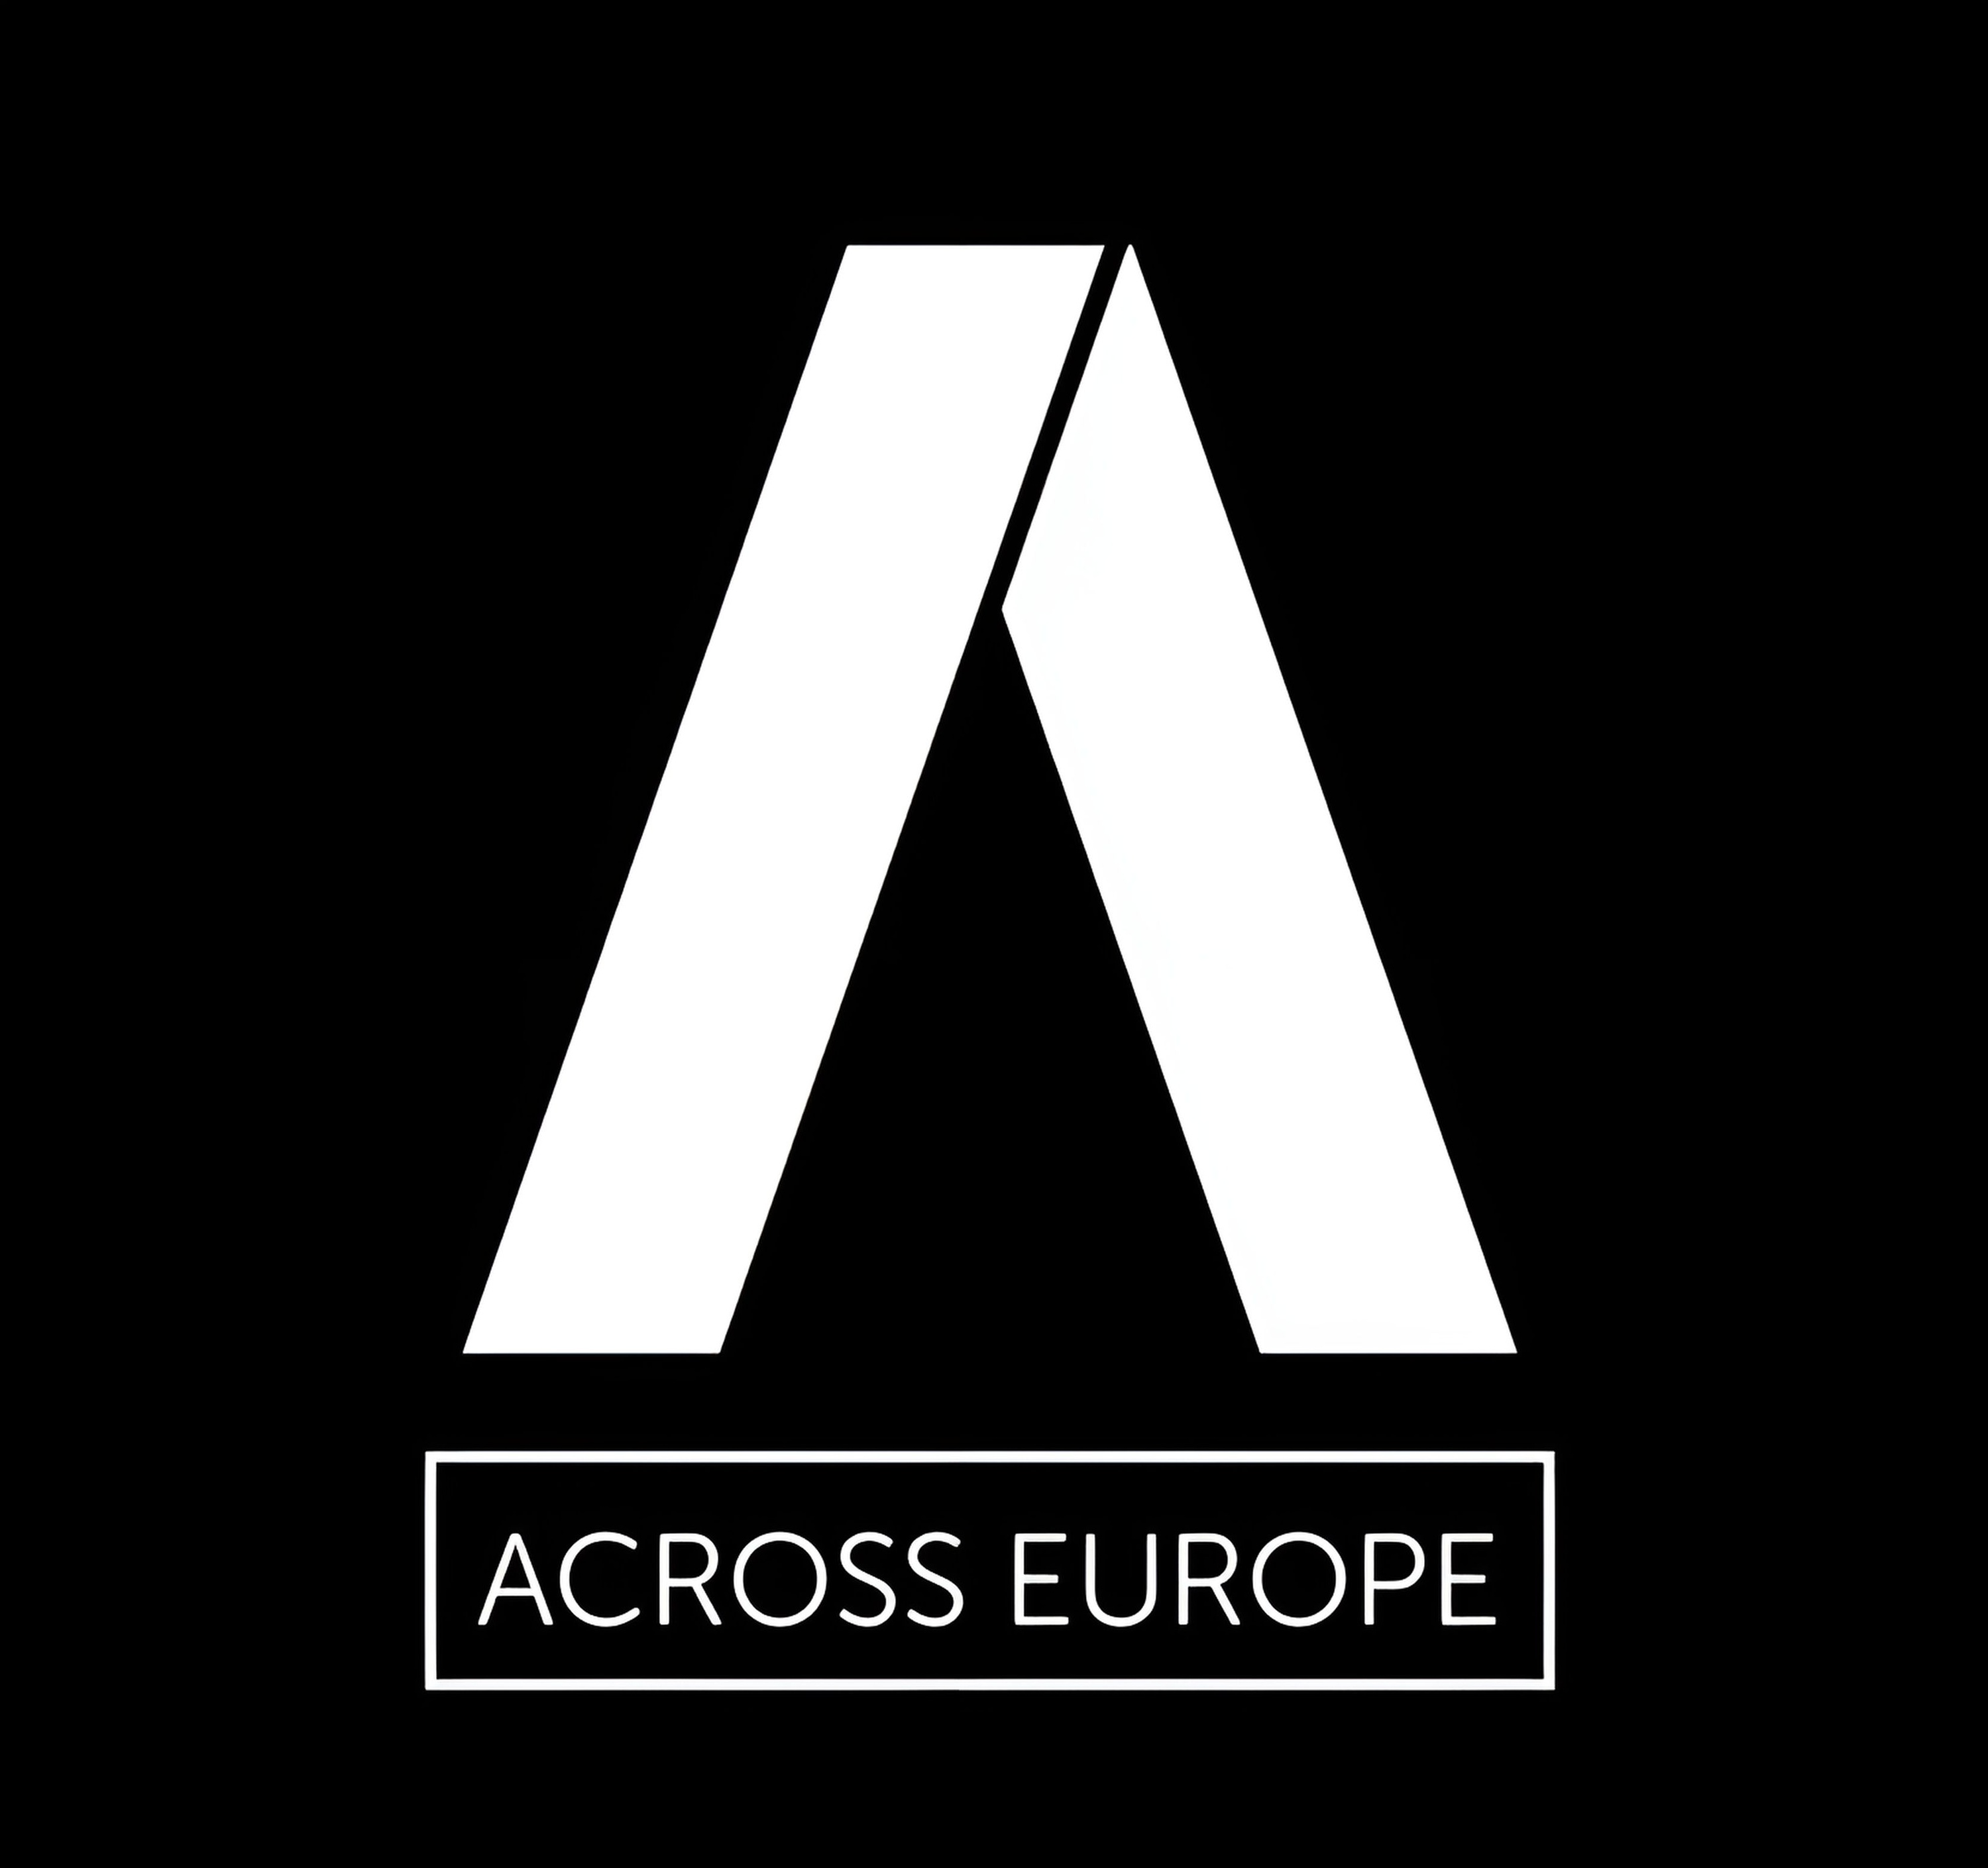 Across Europe logo